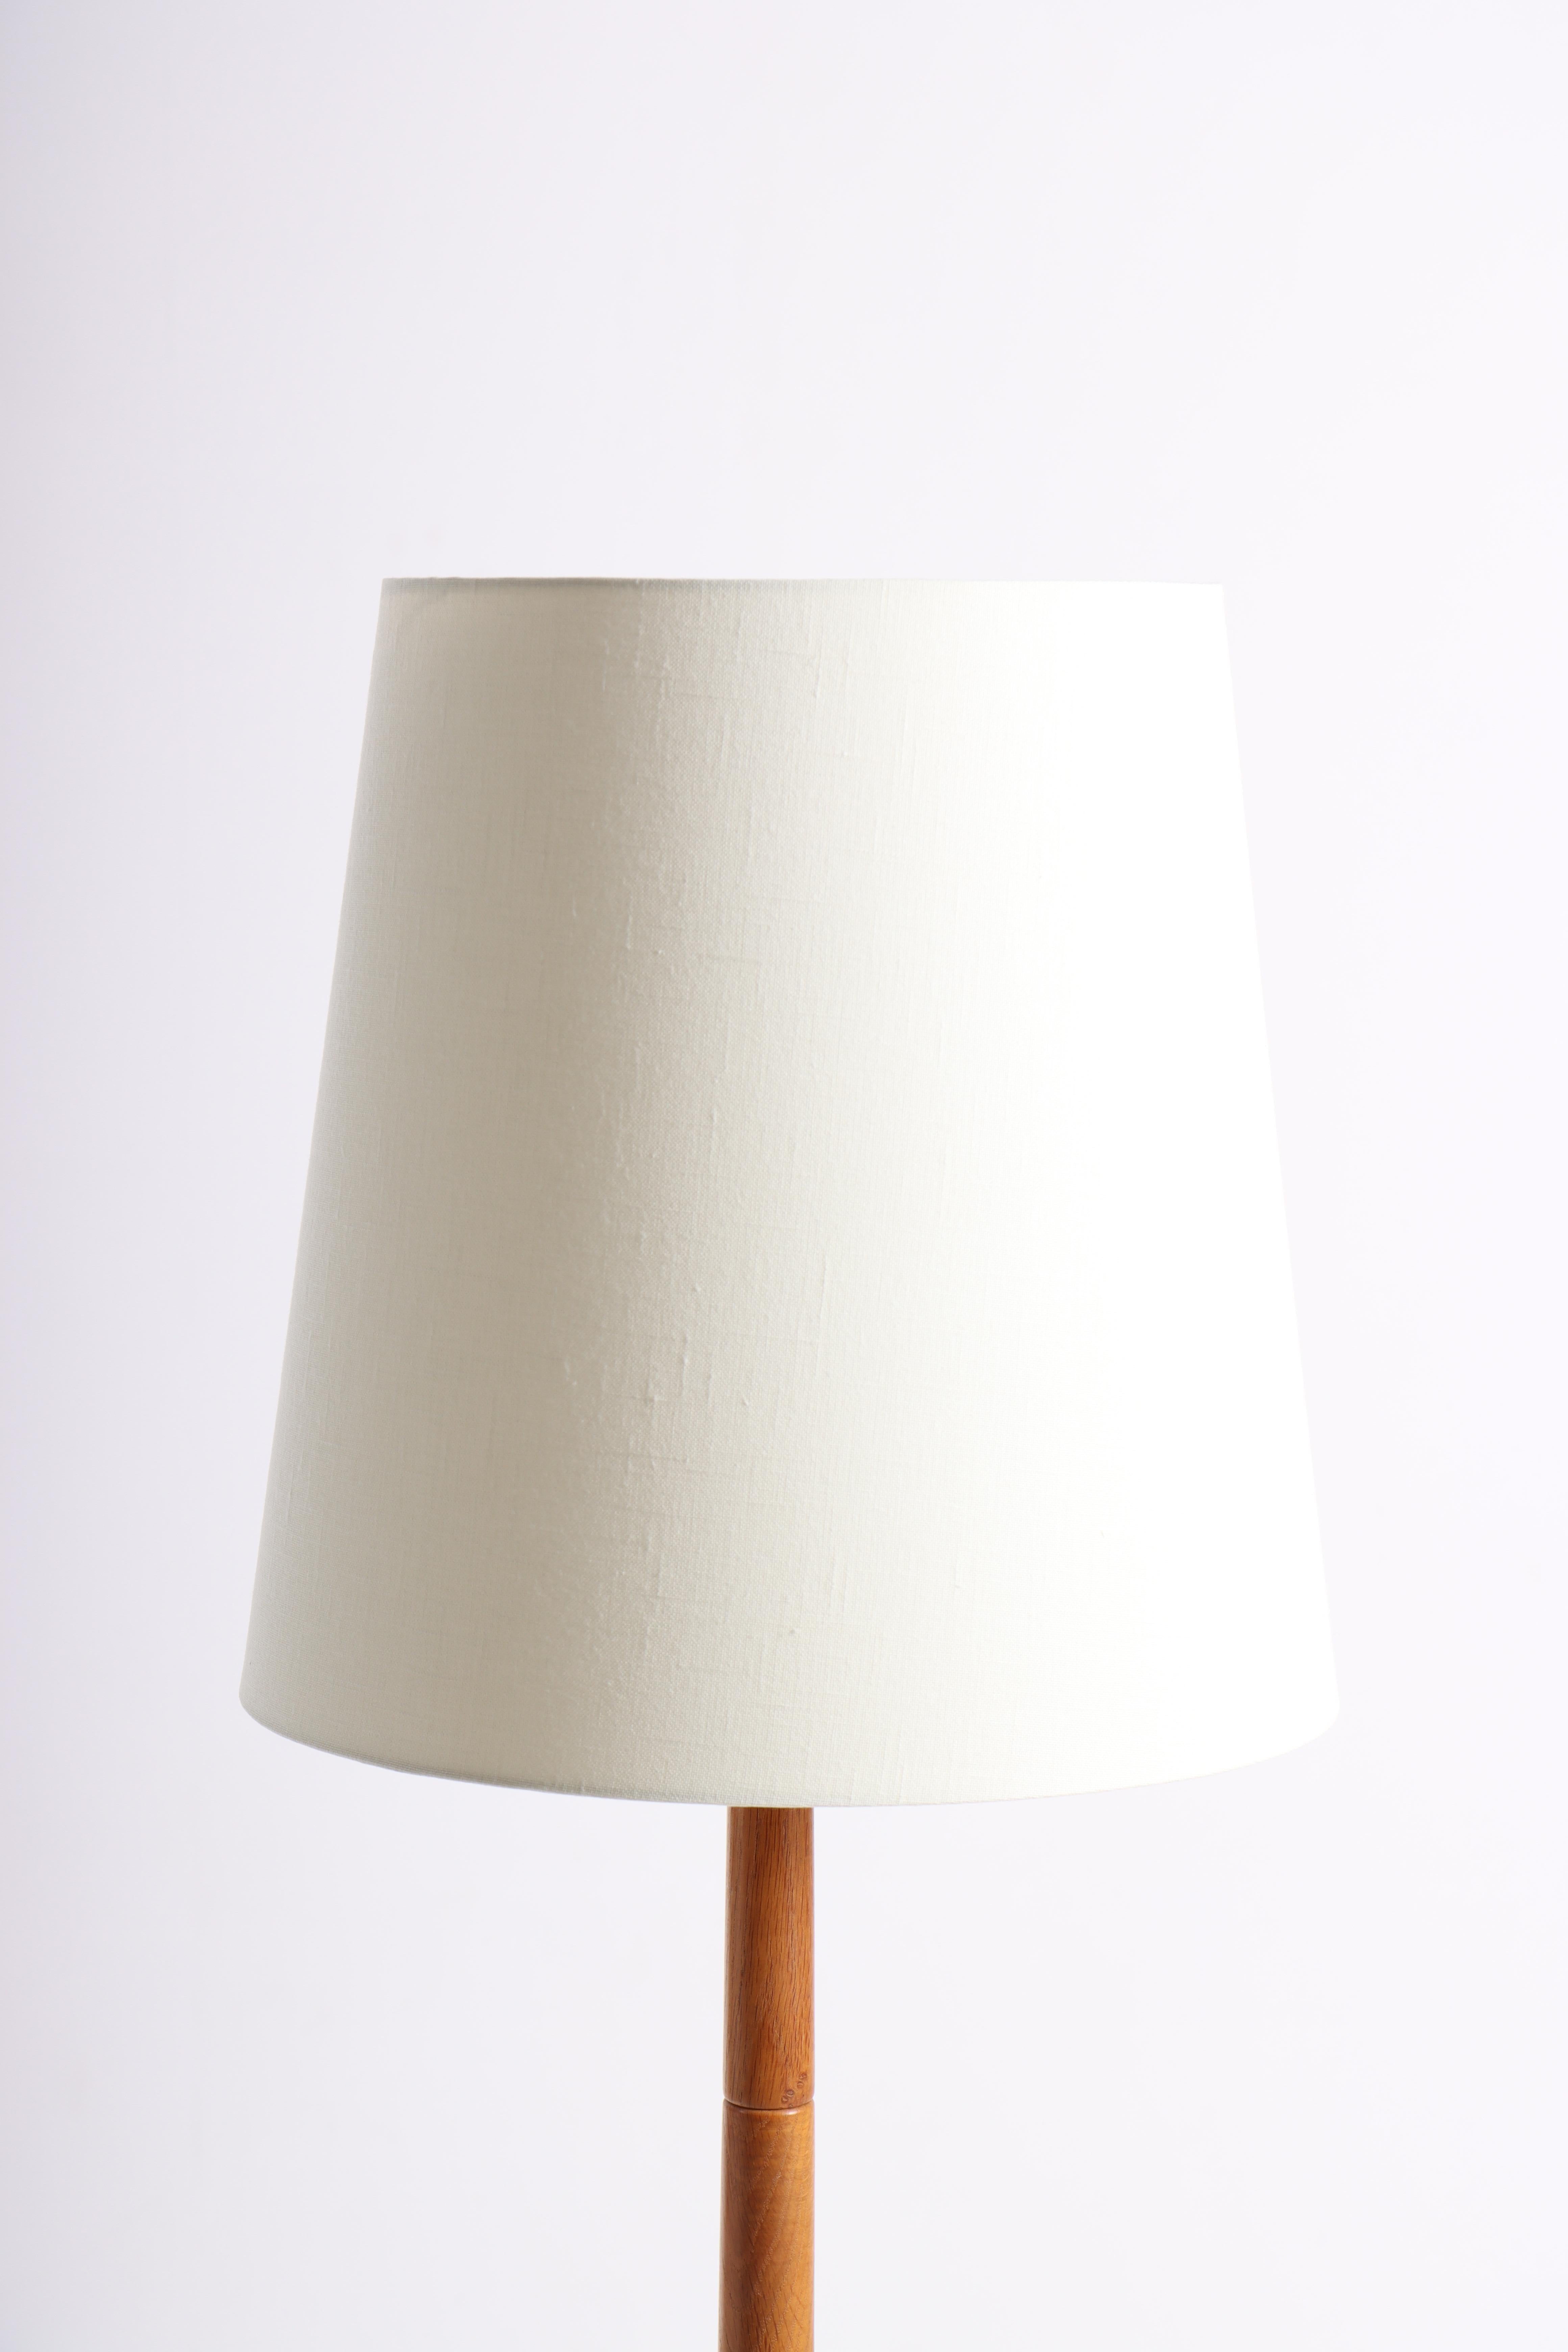 Danish Modern Midcentury Floor Lamp in Oak, Danish Design, 1950s For Sale 1